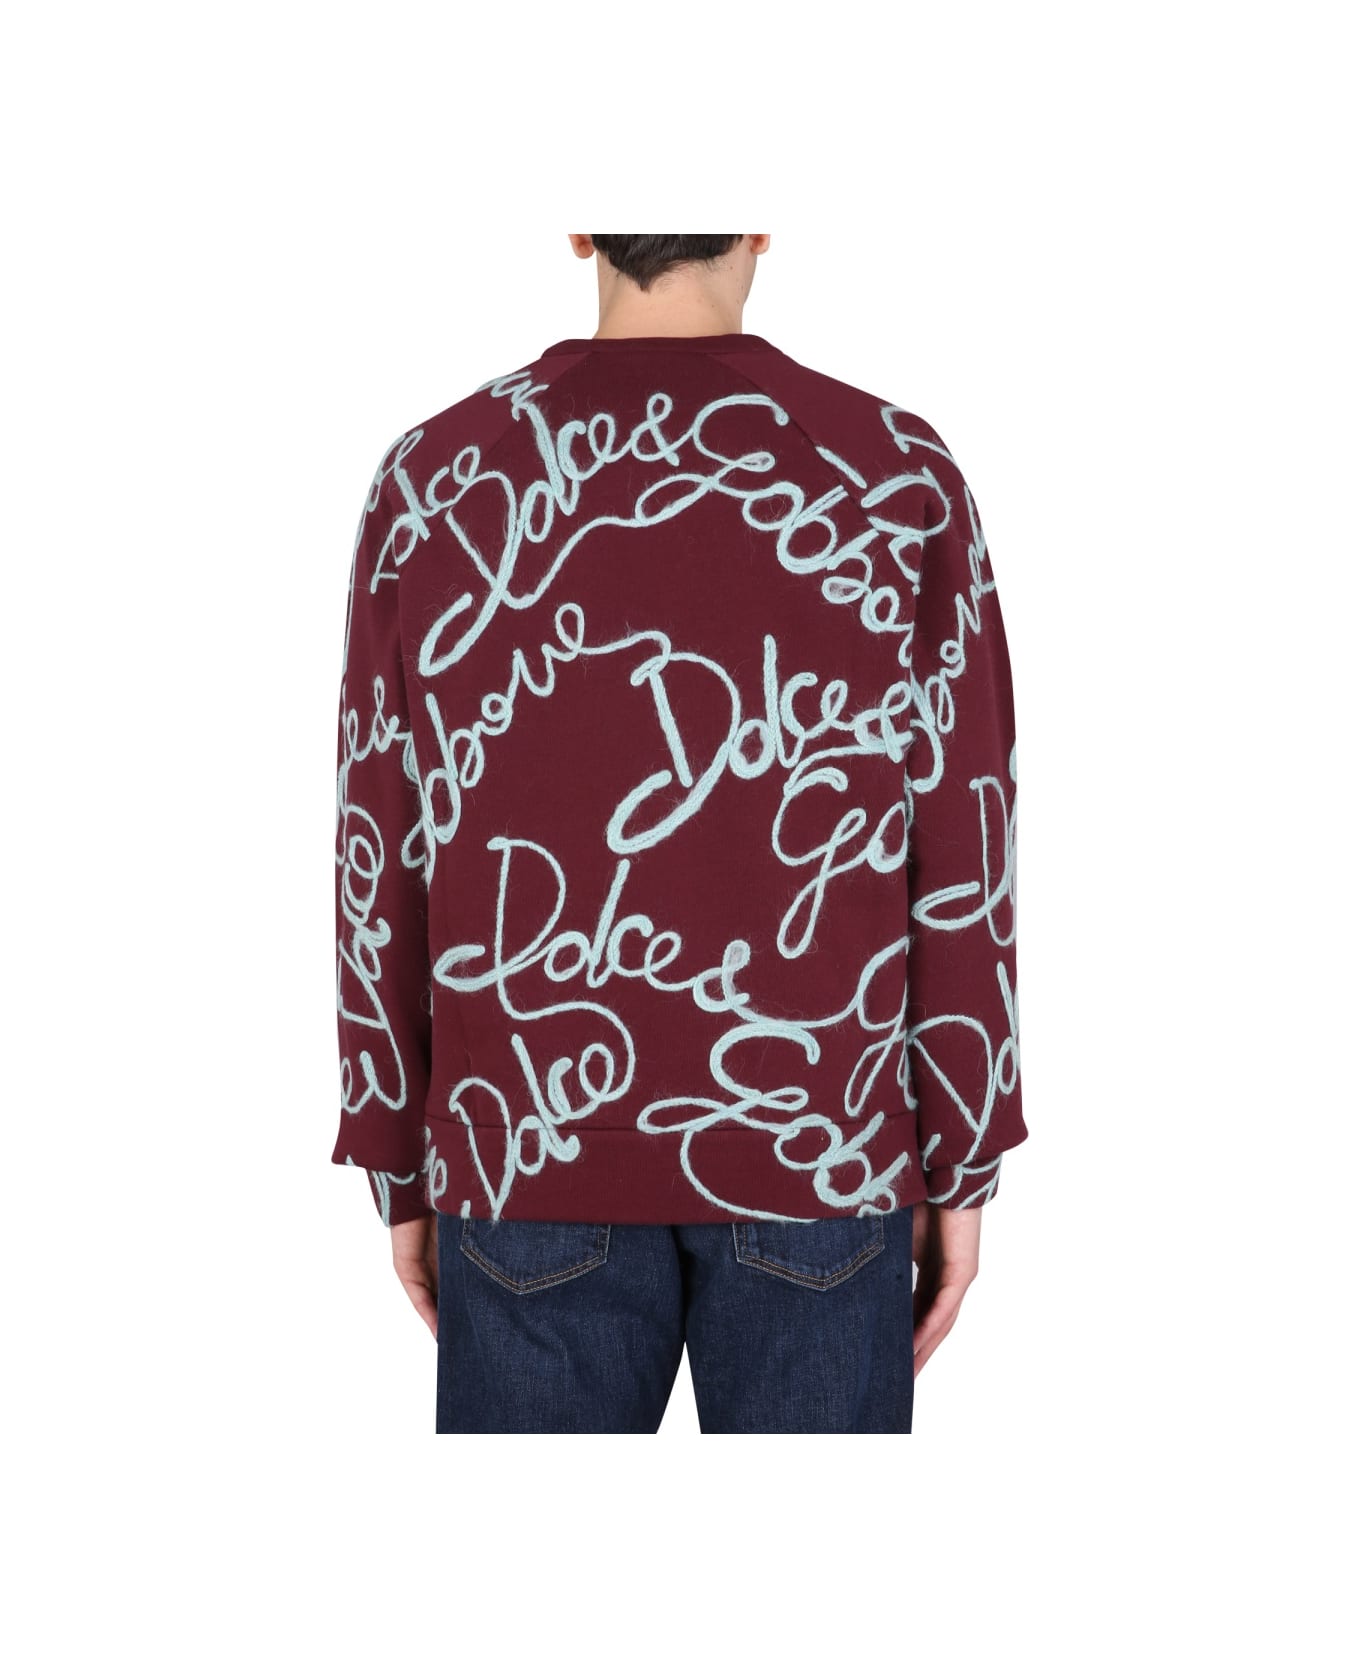 Dolce & Gabbana Embroidered Sweatshirt - BORDEAUX